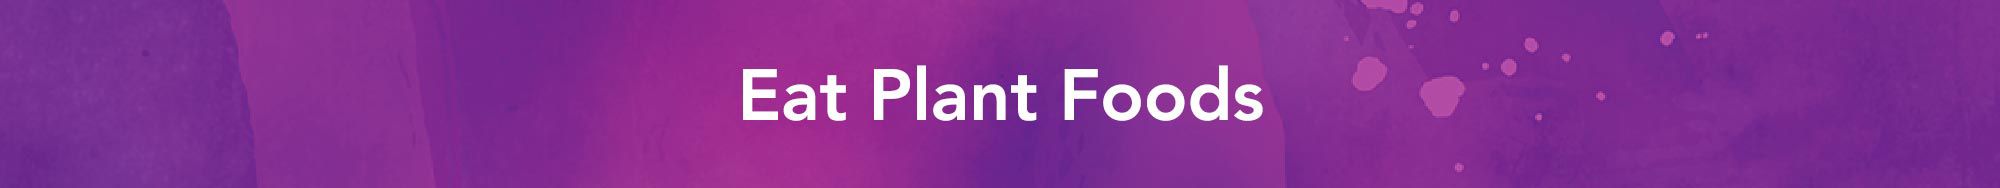 Eat plant foods